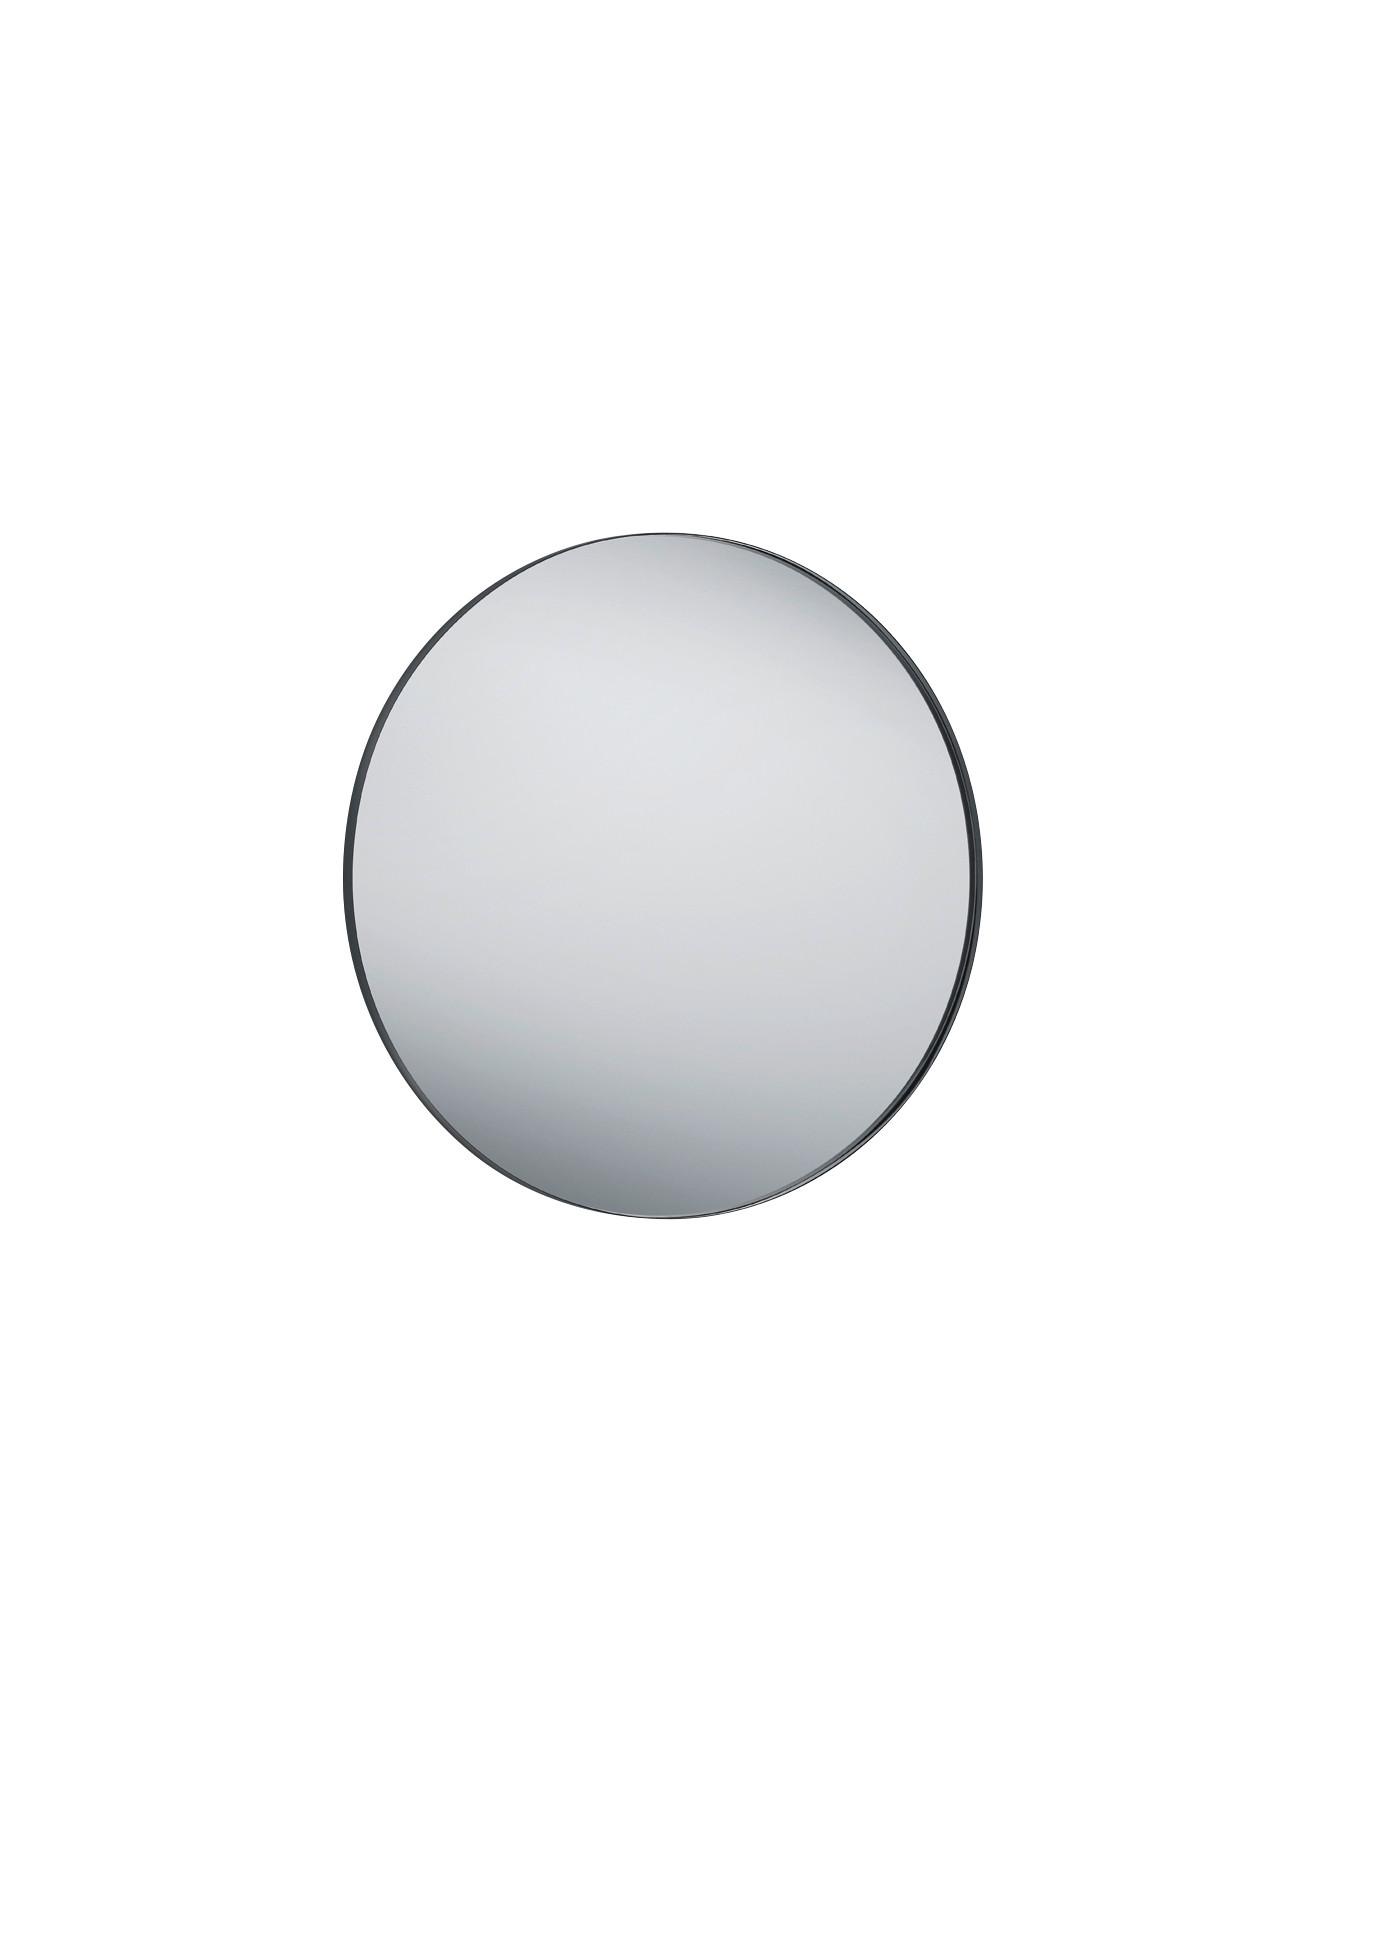 Nástěnné Zrcadlo Britta - černá, Moderní, kov/sklo (80cm) - Modern Living